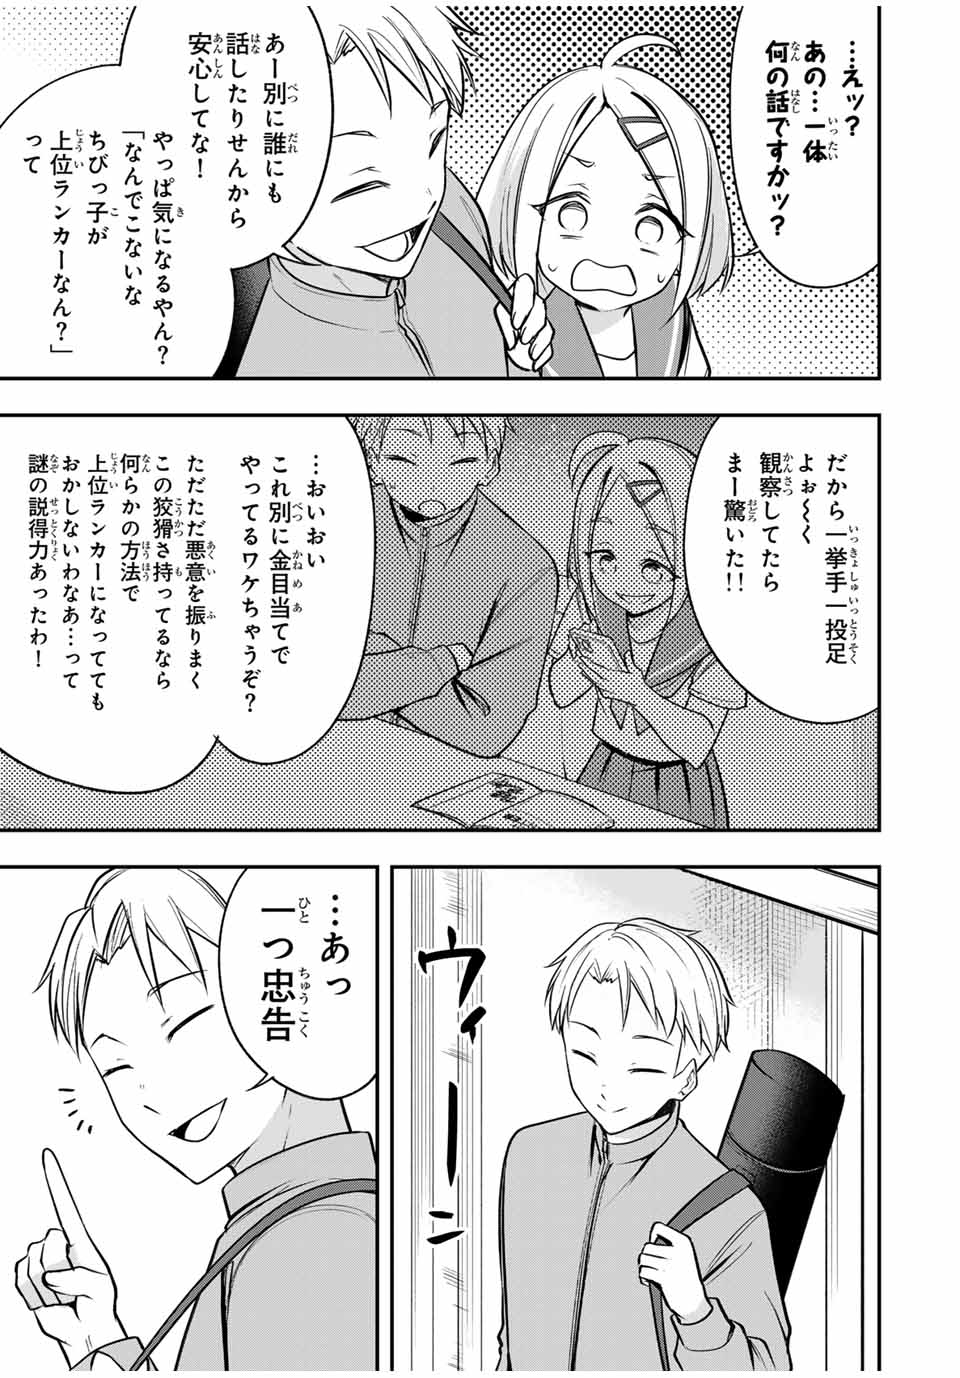 Heroine wa xx Okasegitai - Chapter 12 - Page 19